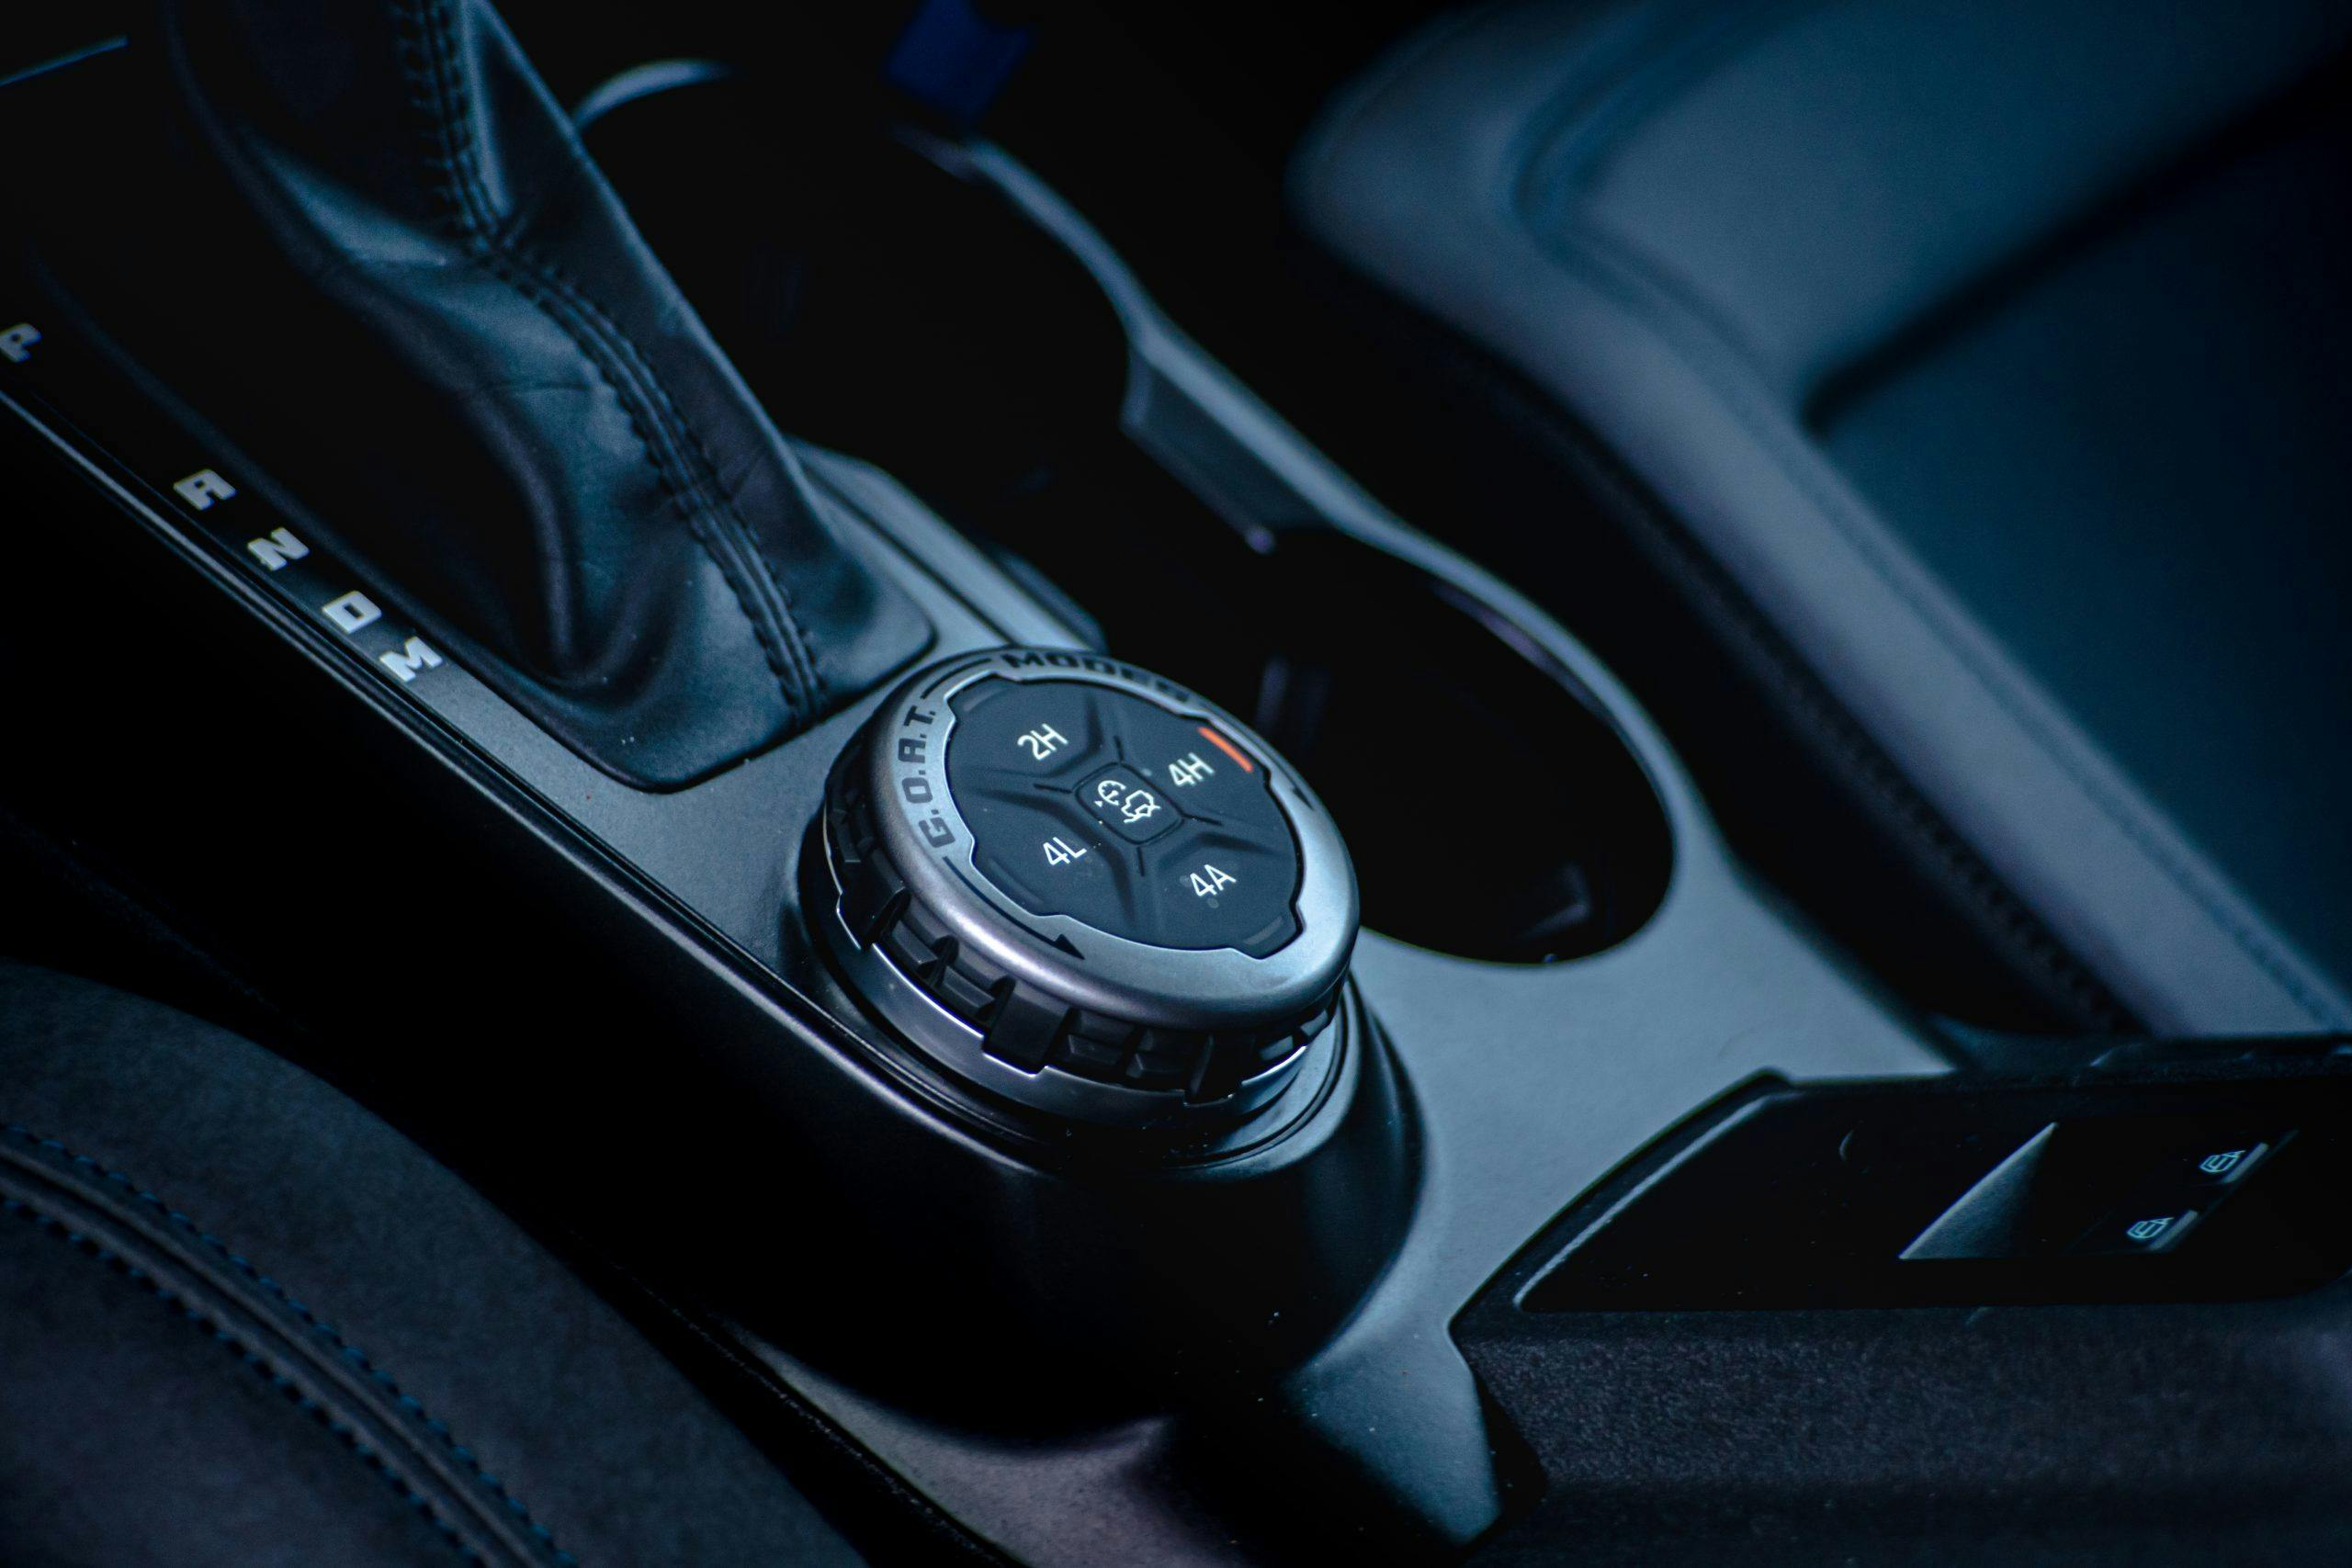 Ford Bronco Black Diamond 2-Door interior 4x4 controls and GOAT mode controller